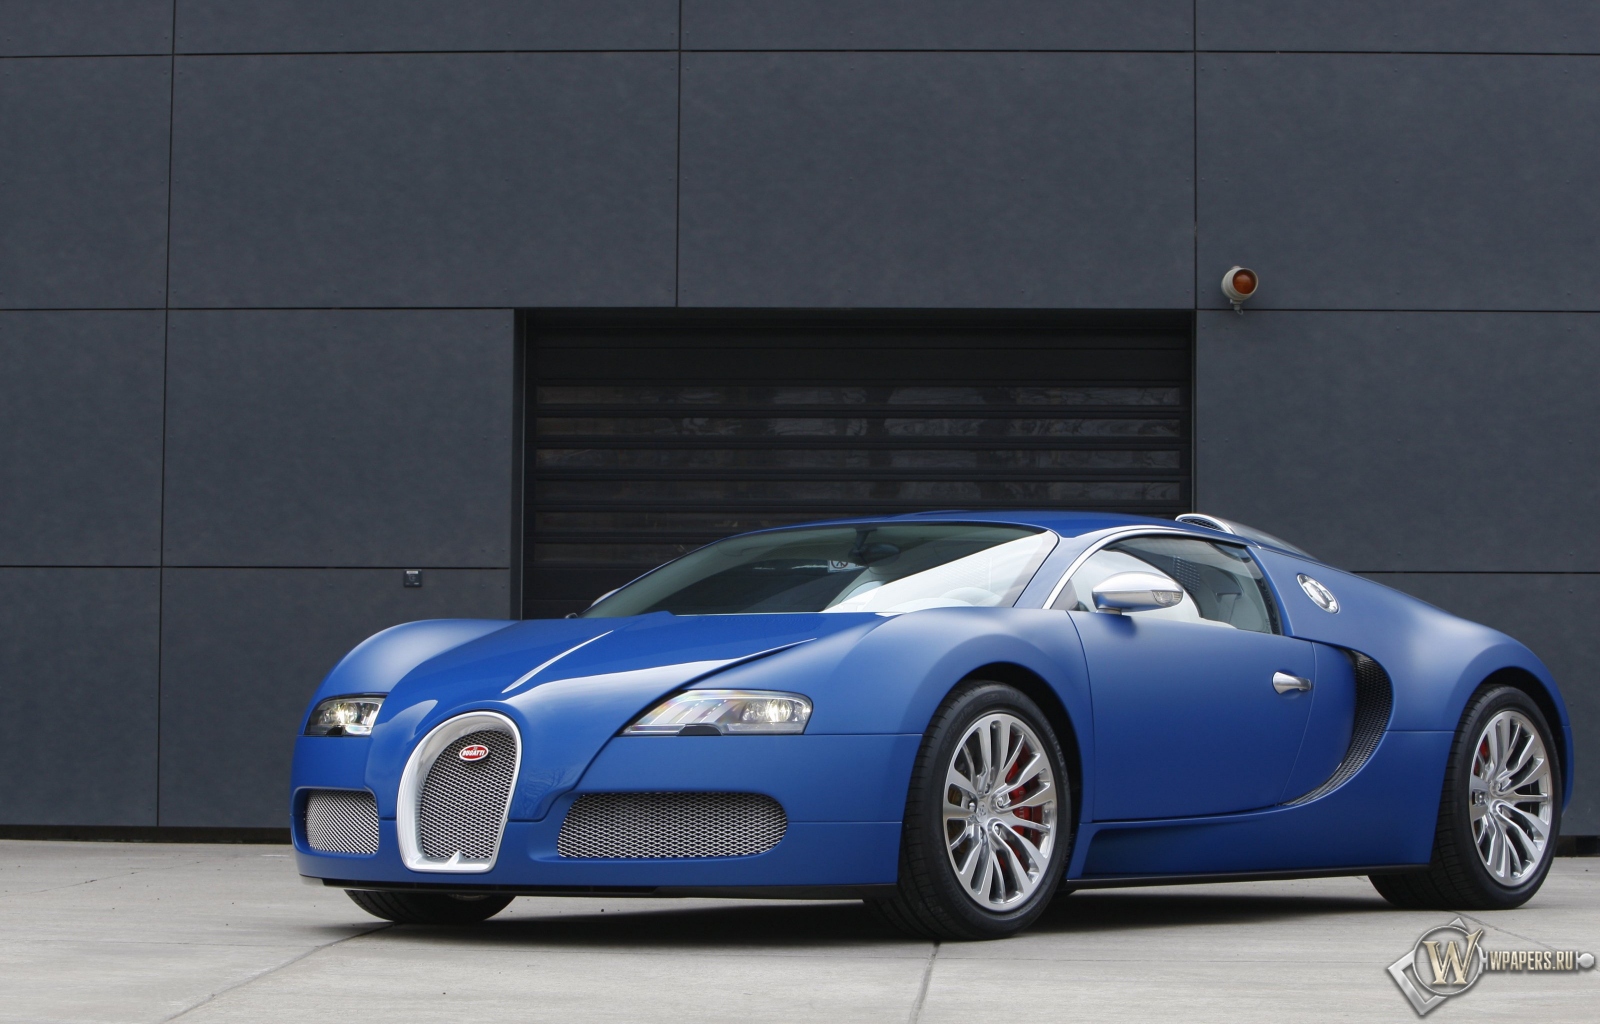 Bugatti Veyron Bleu Centenaire (2009) 1600x1024